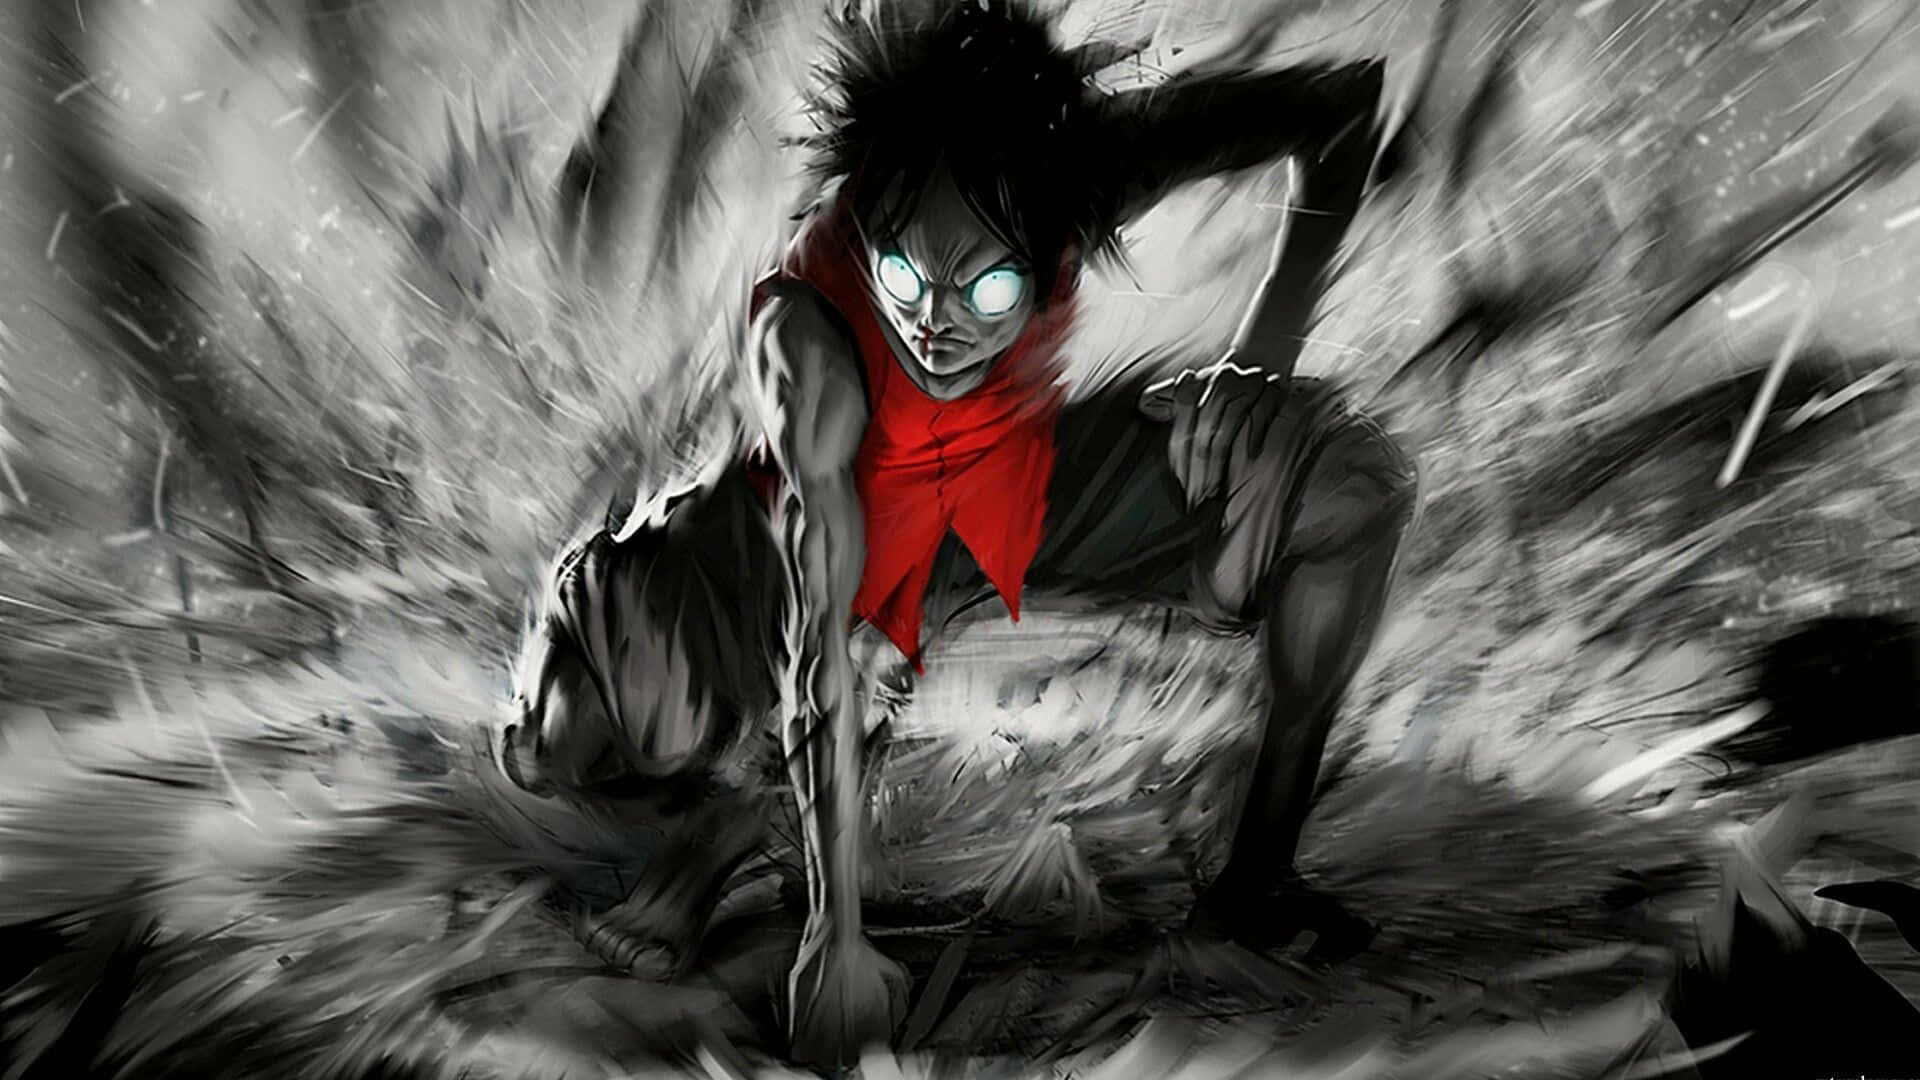 Dark Anime Wallpapers - Top Free Dark Anime Backgrounds - WallpaperAccess |  Hunter x hunter, Rage art, Dark anime